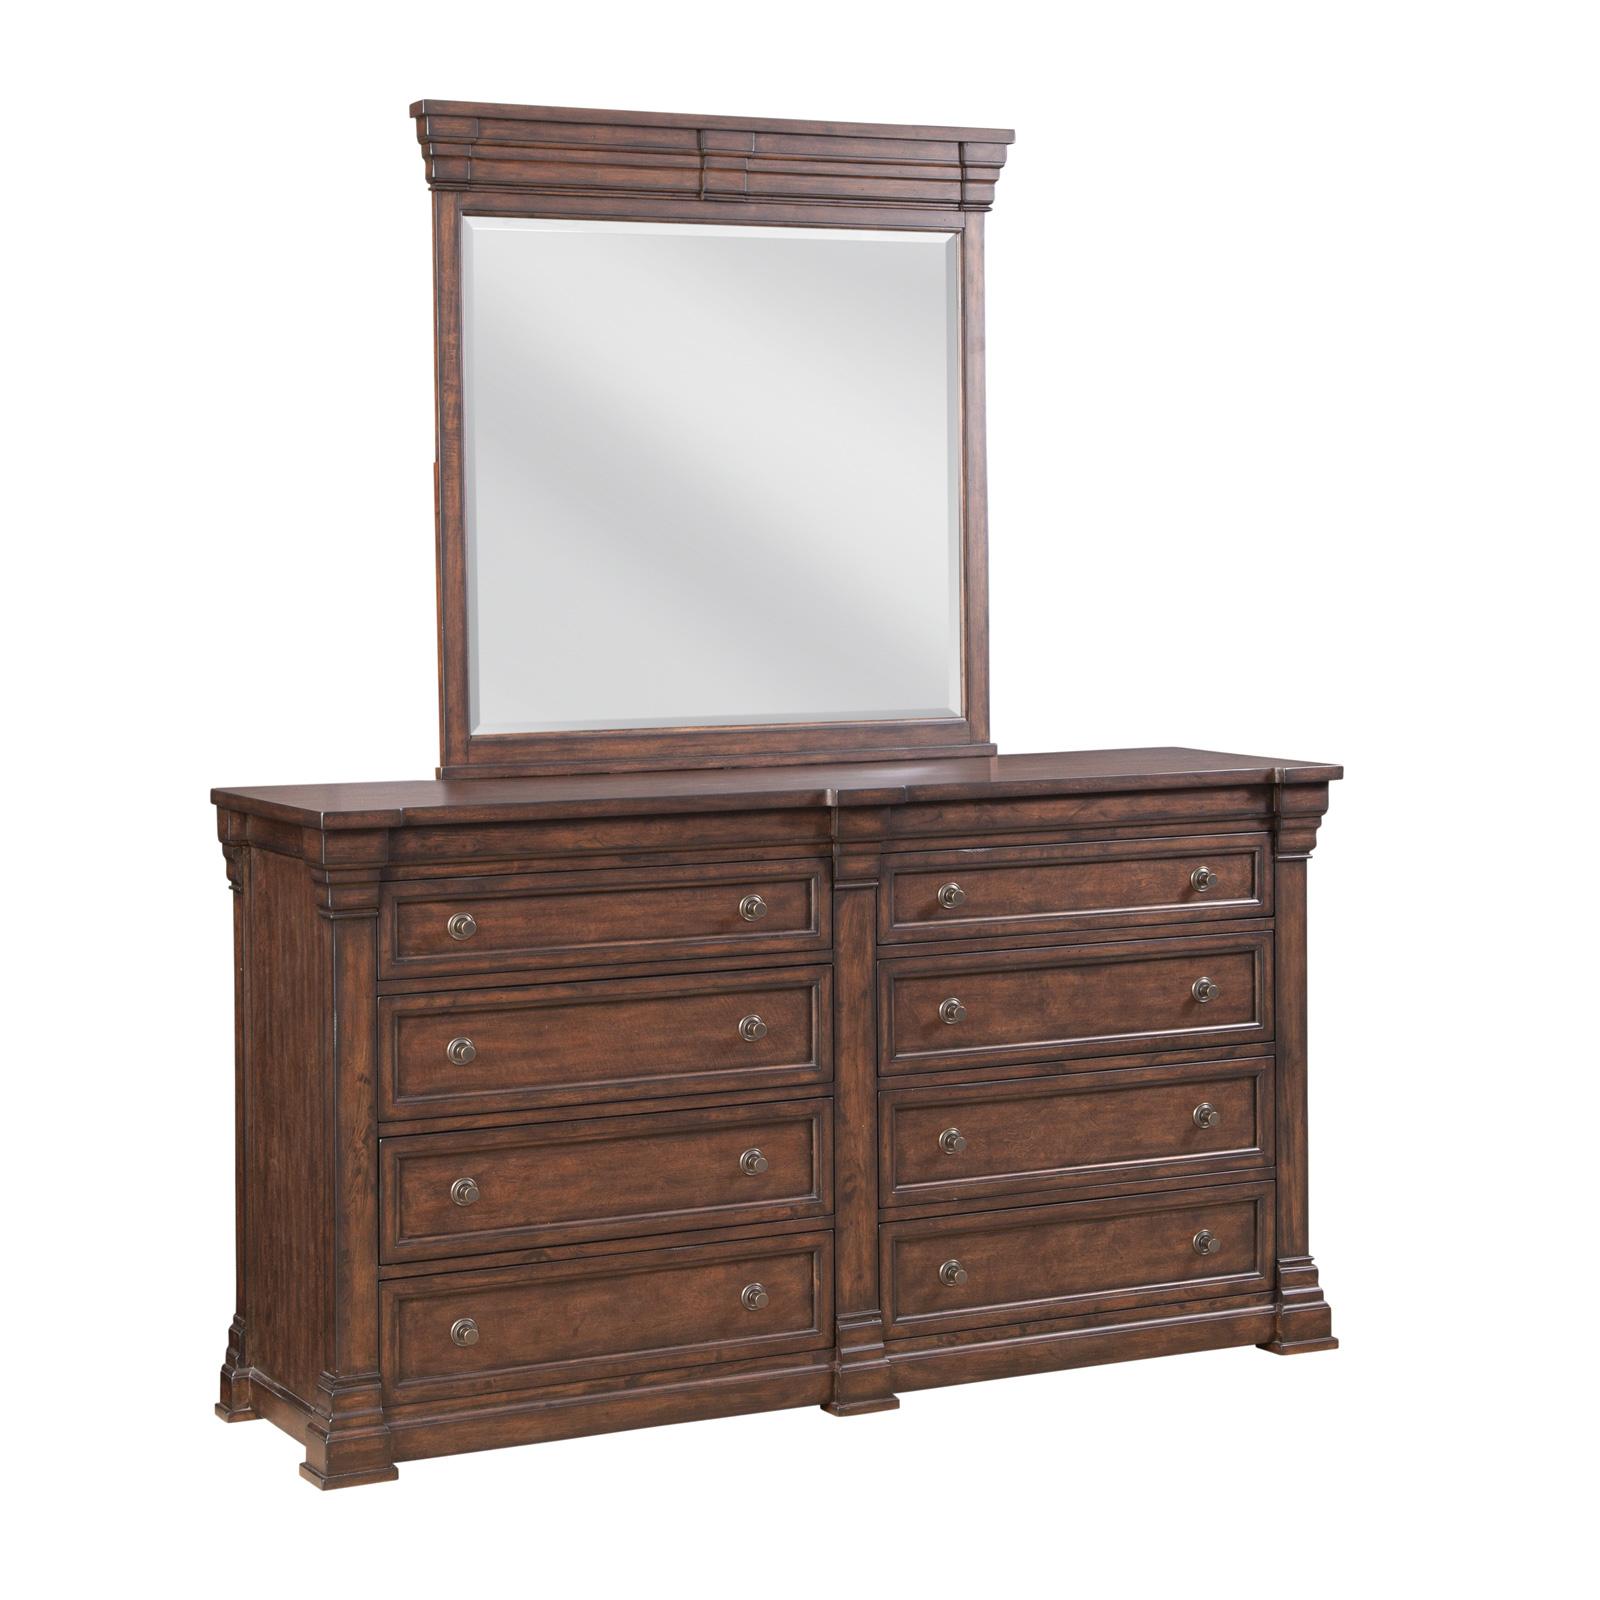 Transitional, Traditional Dresser With Mirror Kestrel Hills 4800-DMR 4800-DMR in Tobacco, Mahogany 